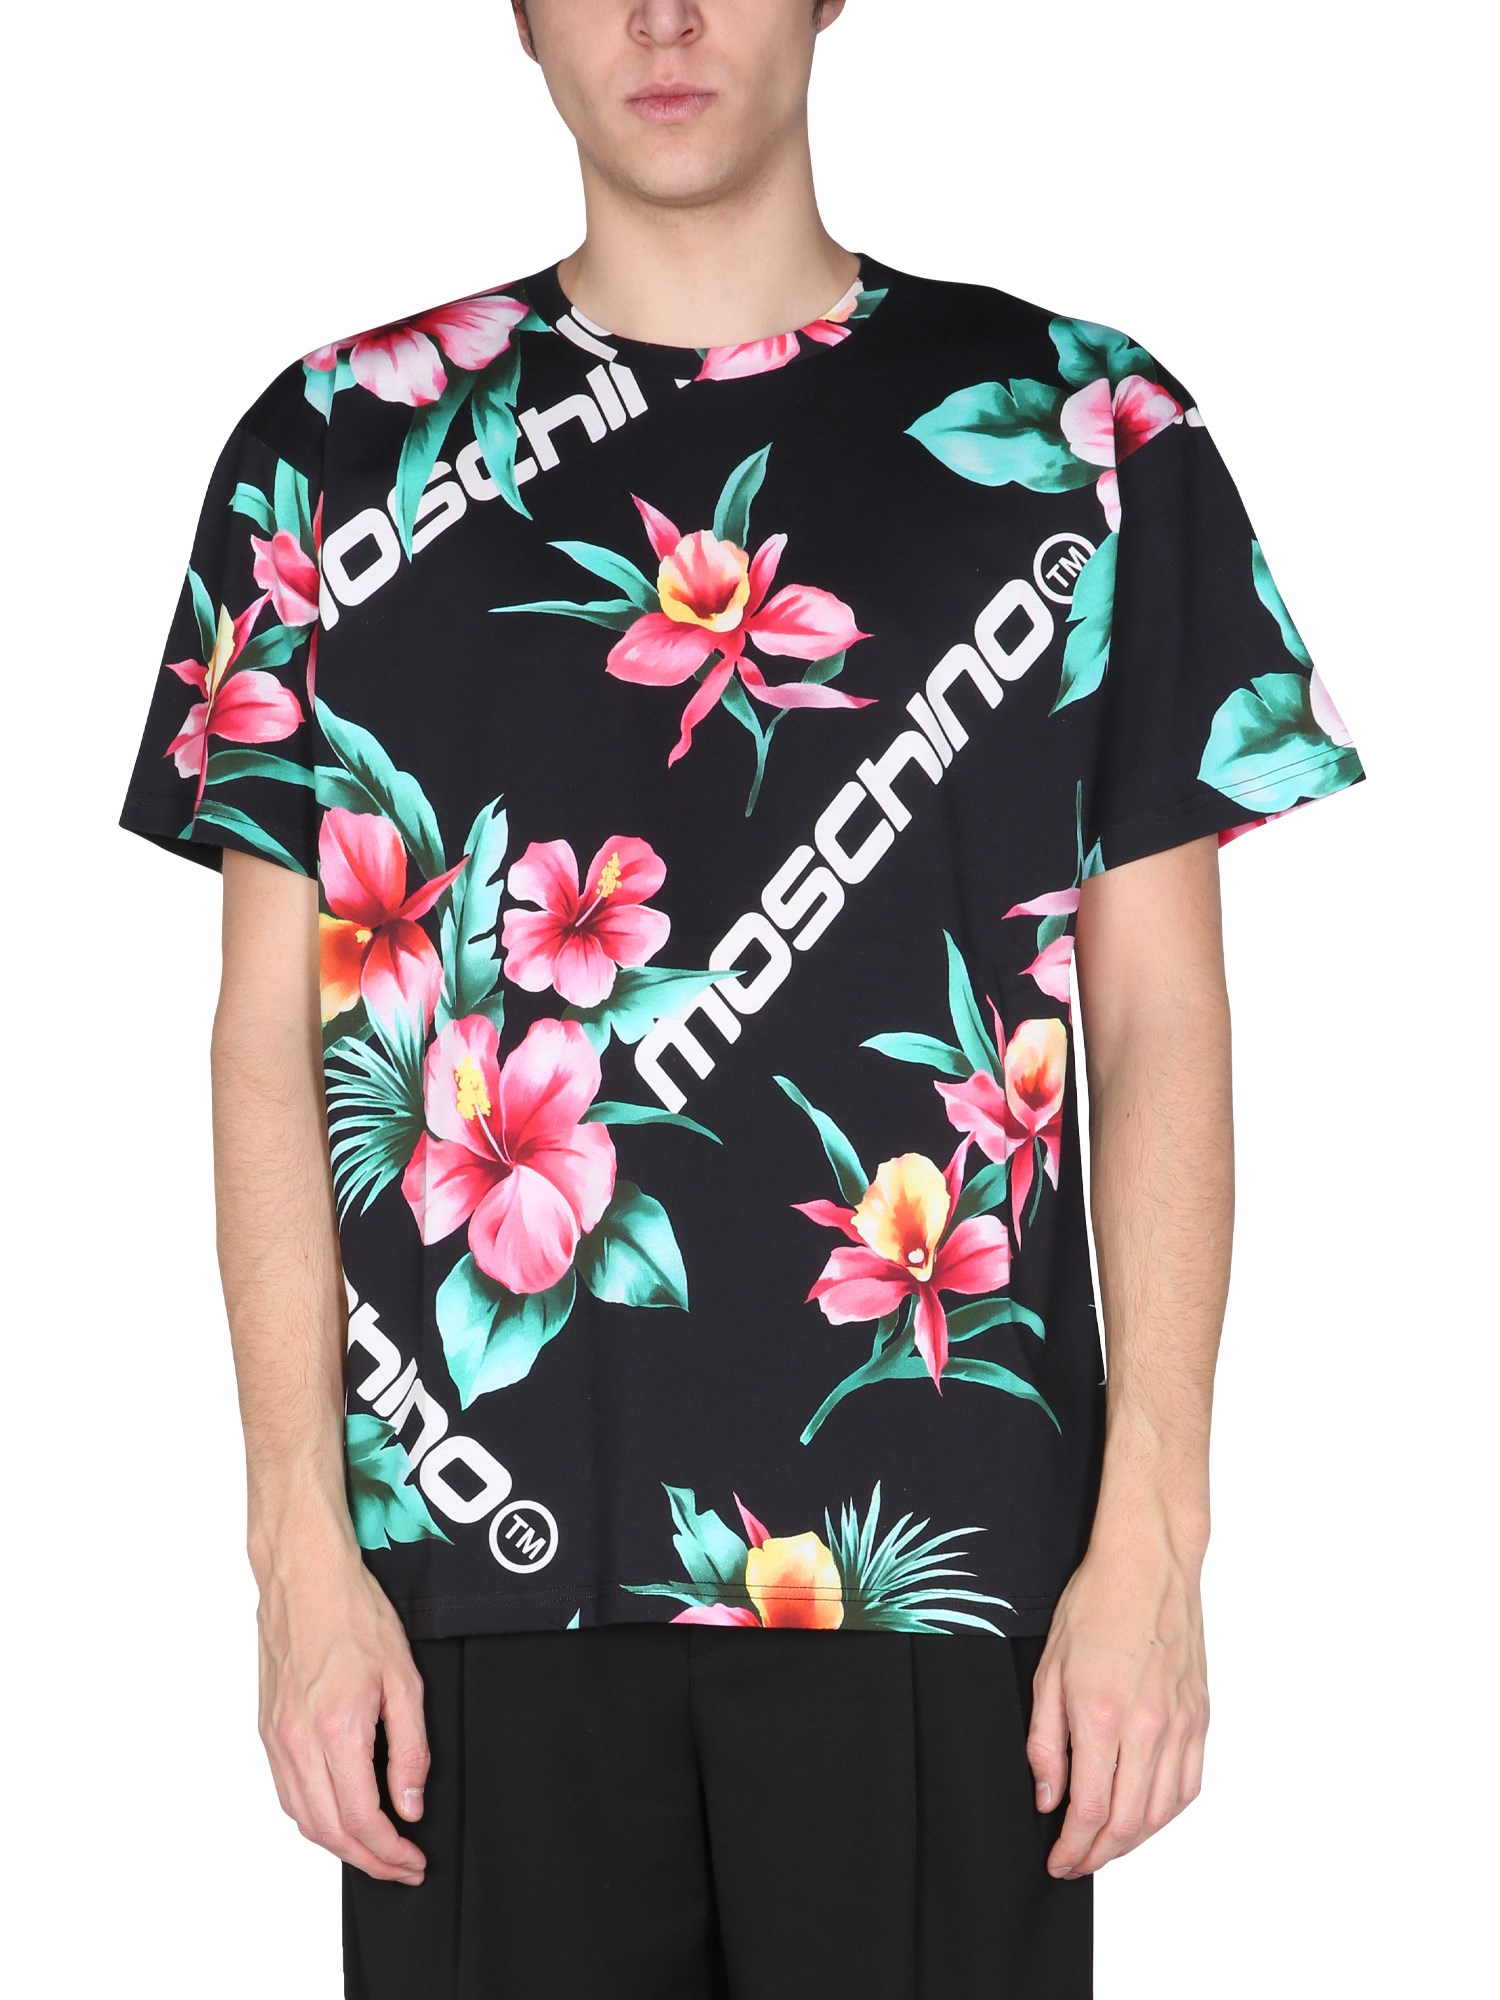 moschino floral print t-shirt